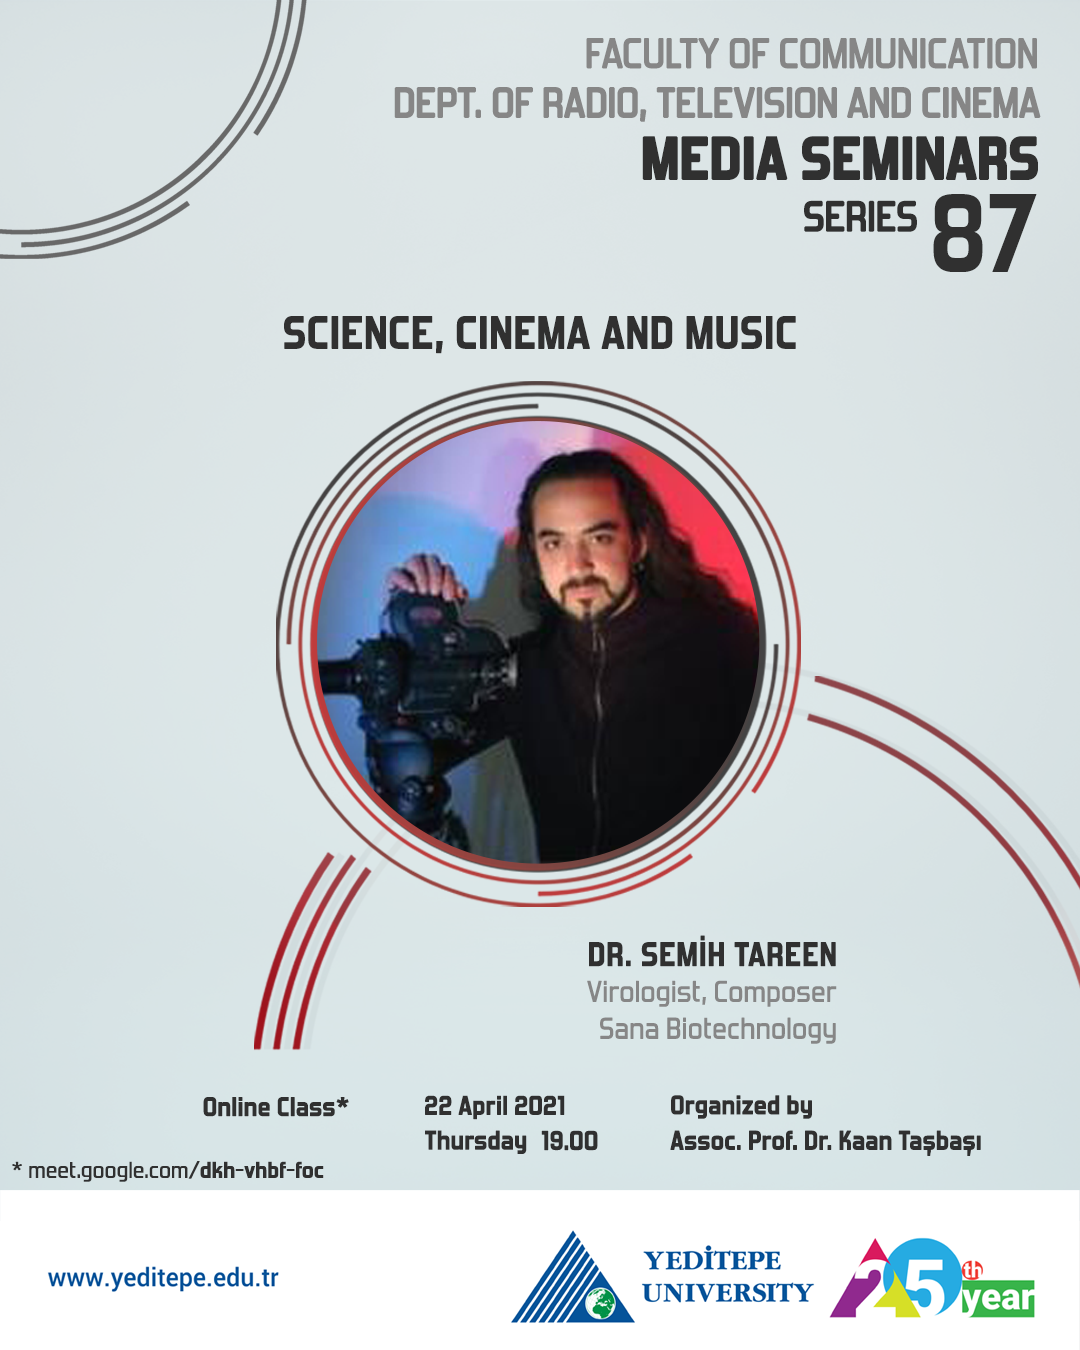 Department of Radio, Television and Cinema Media Seminars Series 87